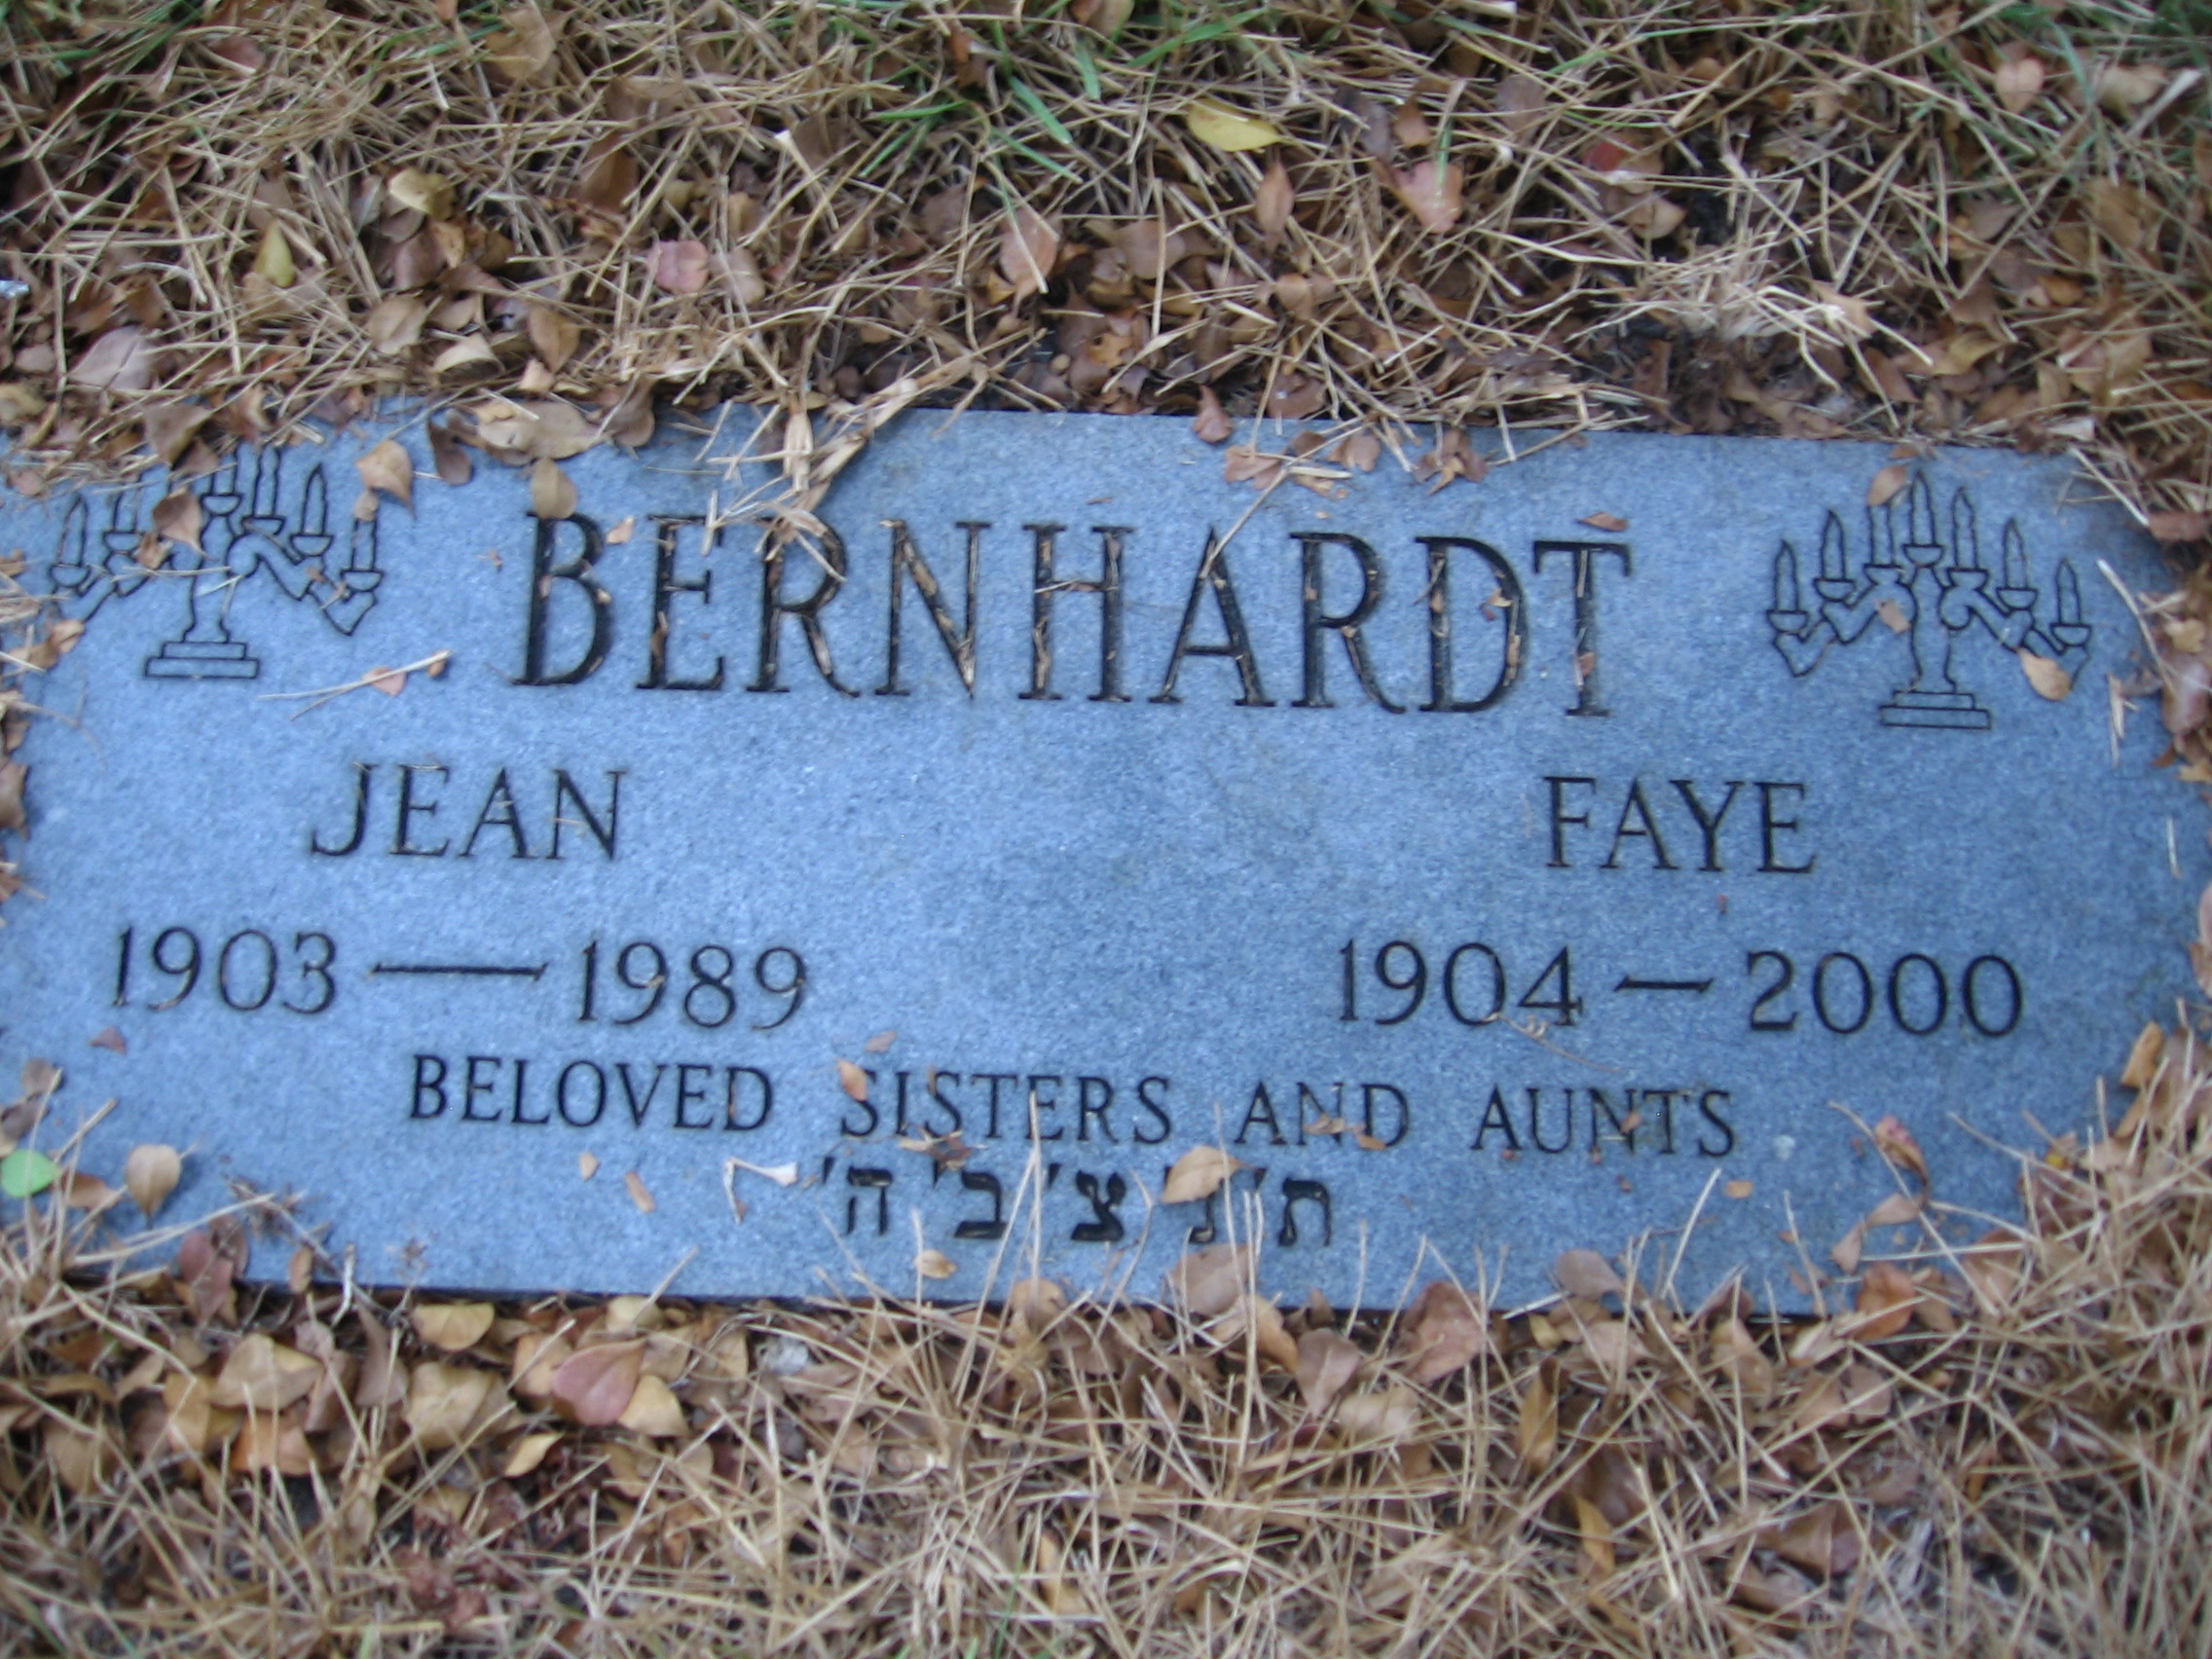 Faye Bernhardt